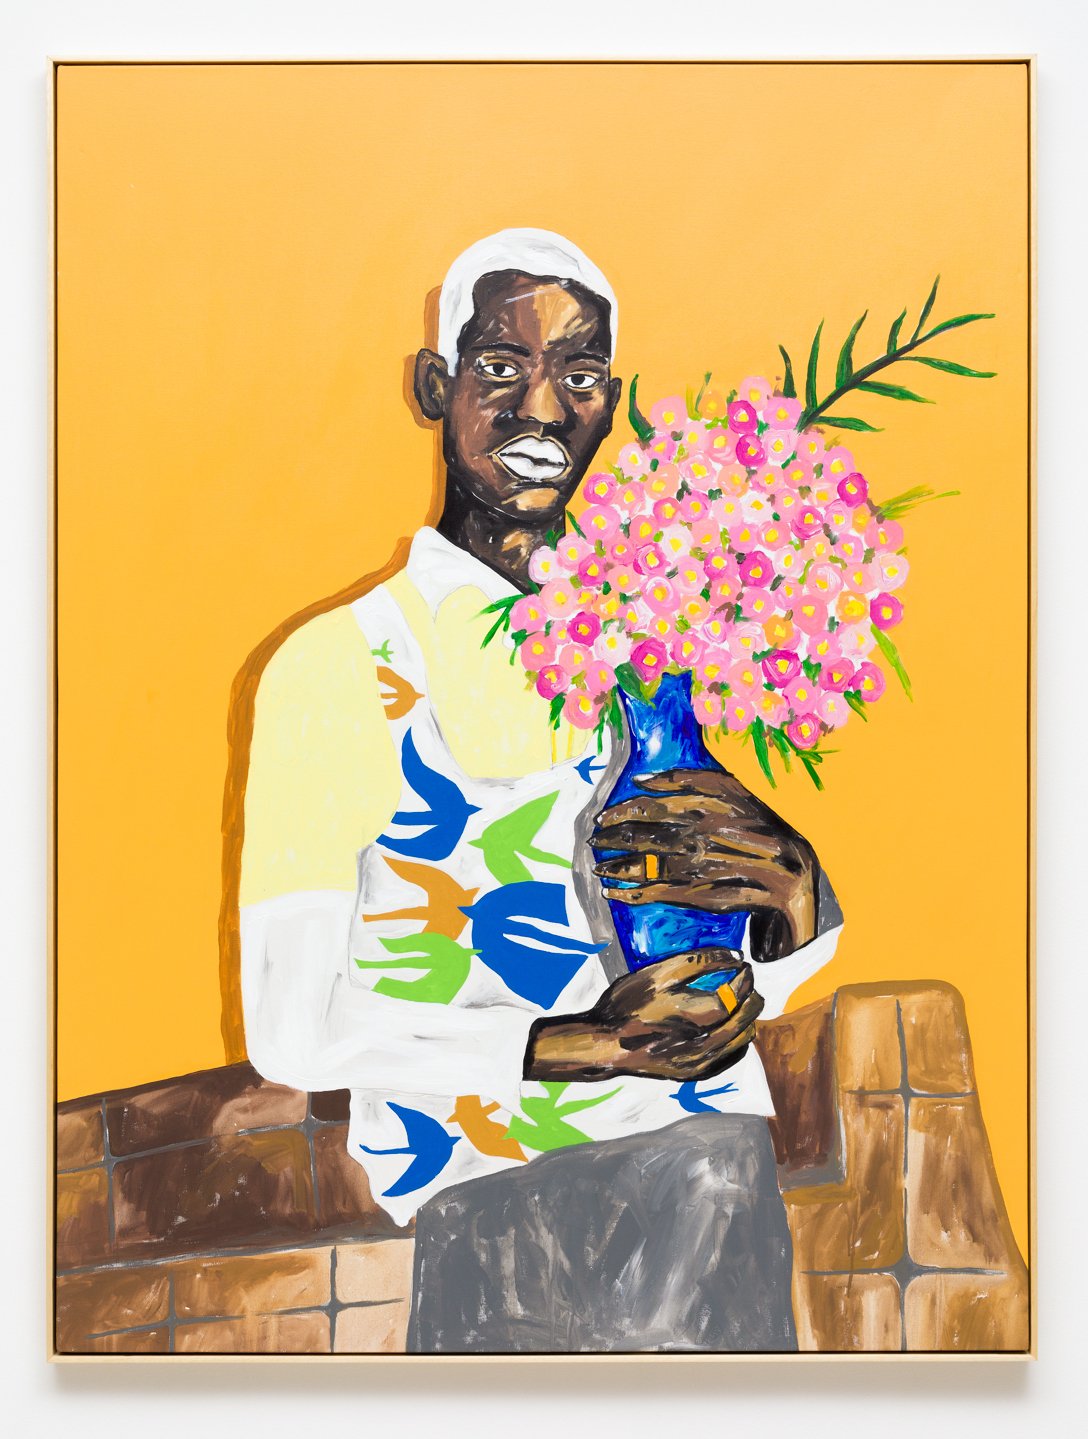  “O vaso de Marcel", 160 x 125 cm, Acrylic on Canvas, 2022 